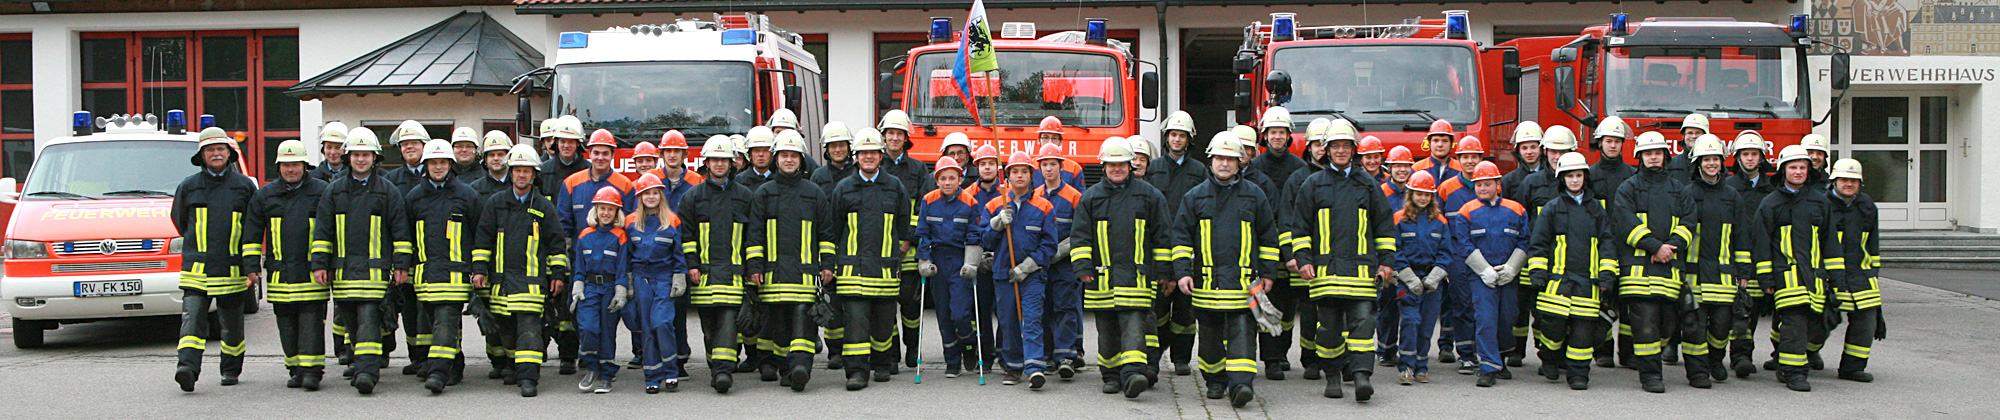 Freiwillige Feuerwehr Kißlegg